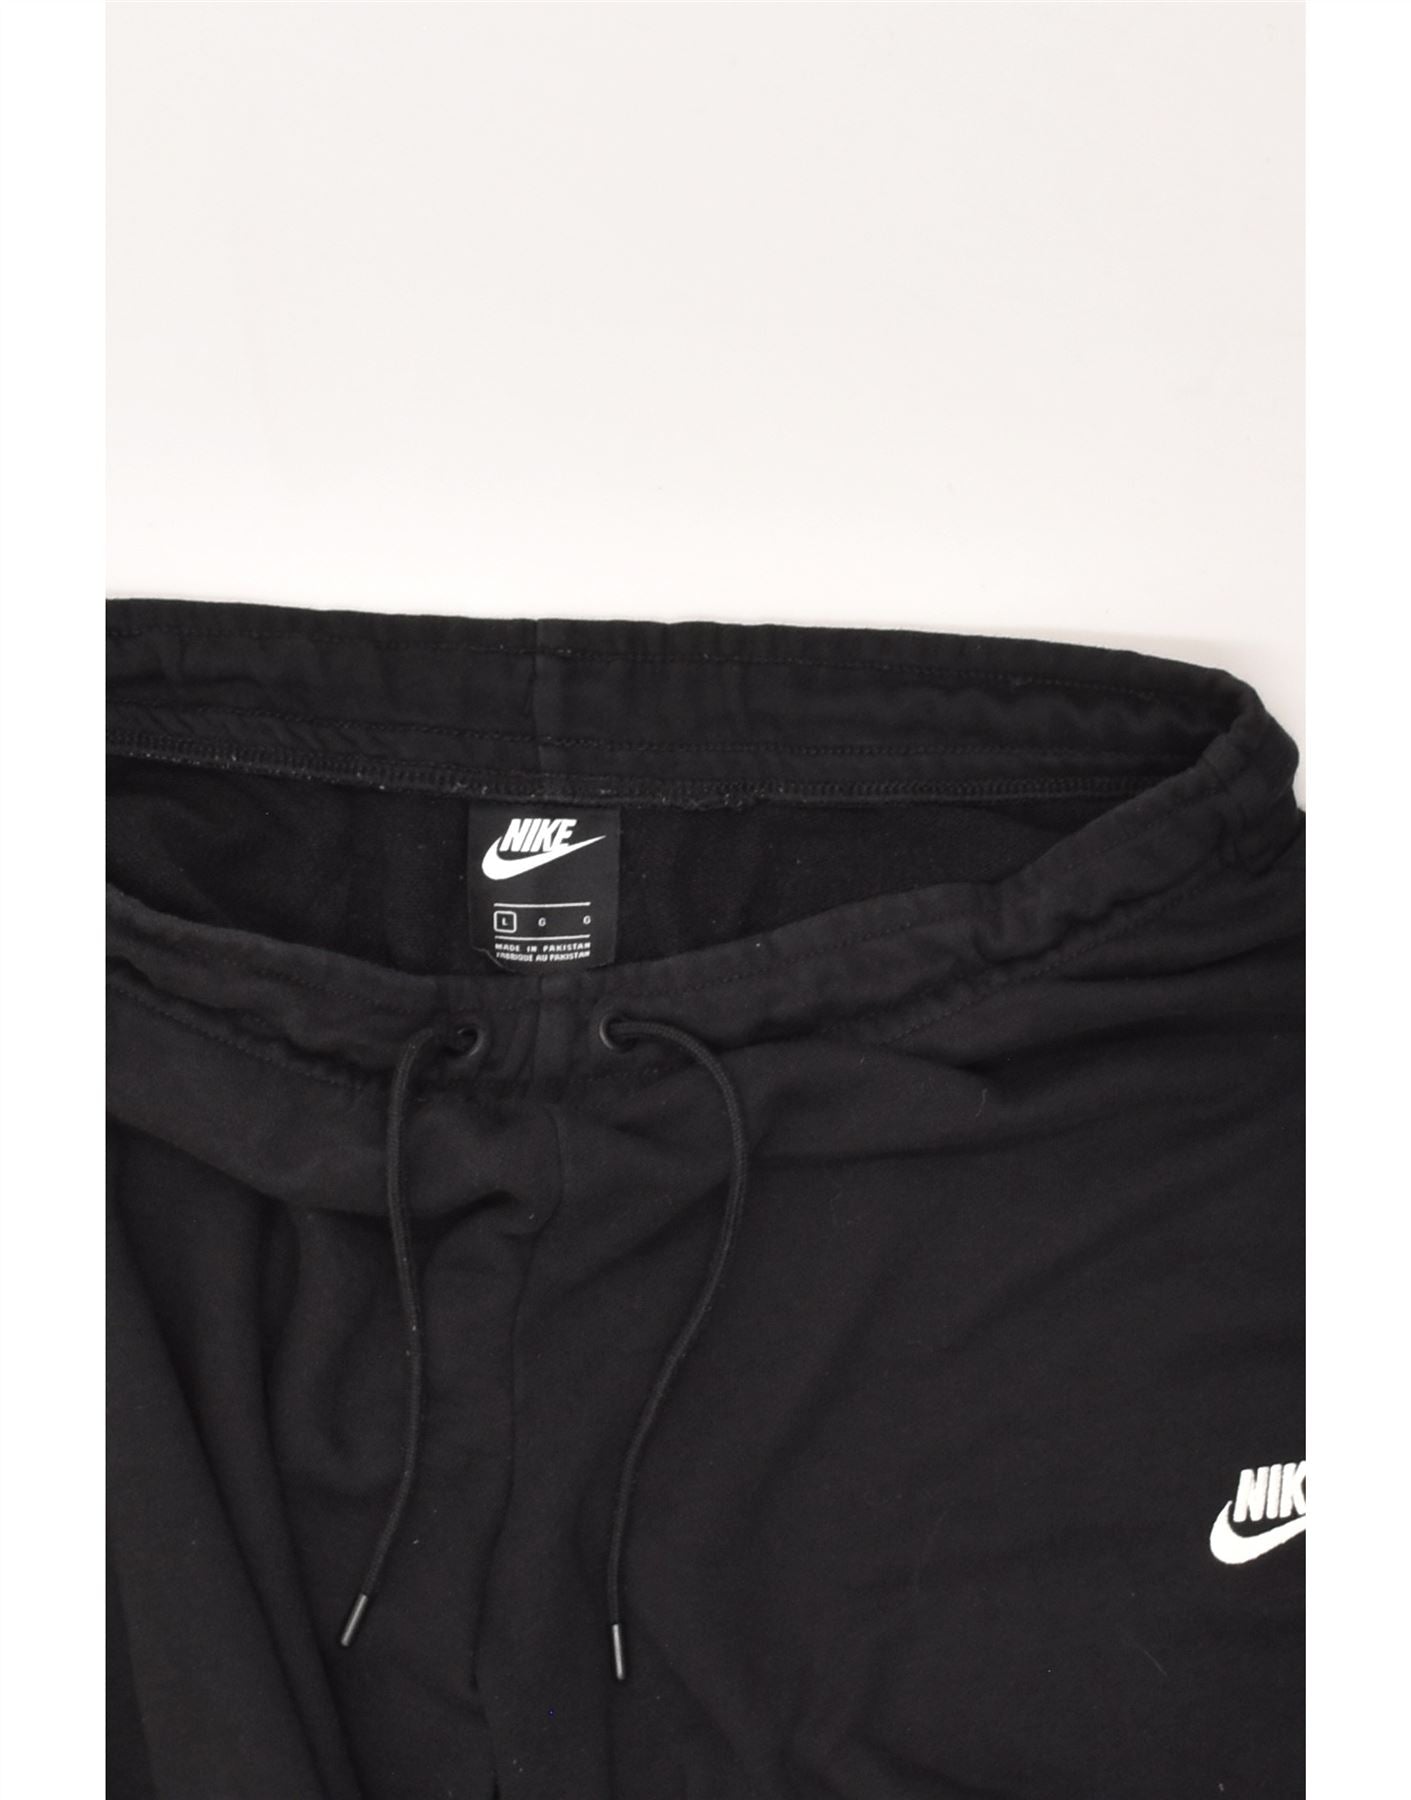 Nike pants real vs fake. How to spot fake nike sport pants and sweatpants -  YouTube